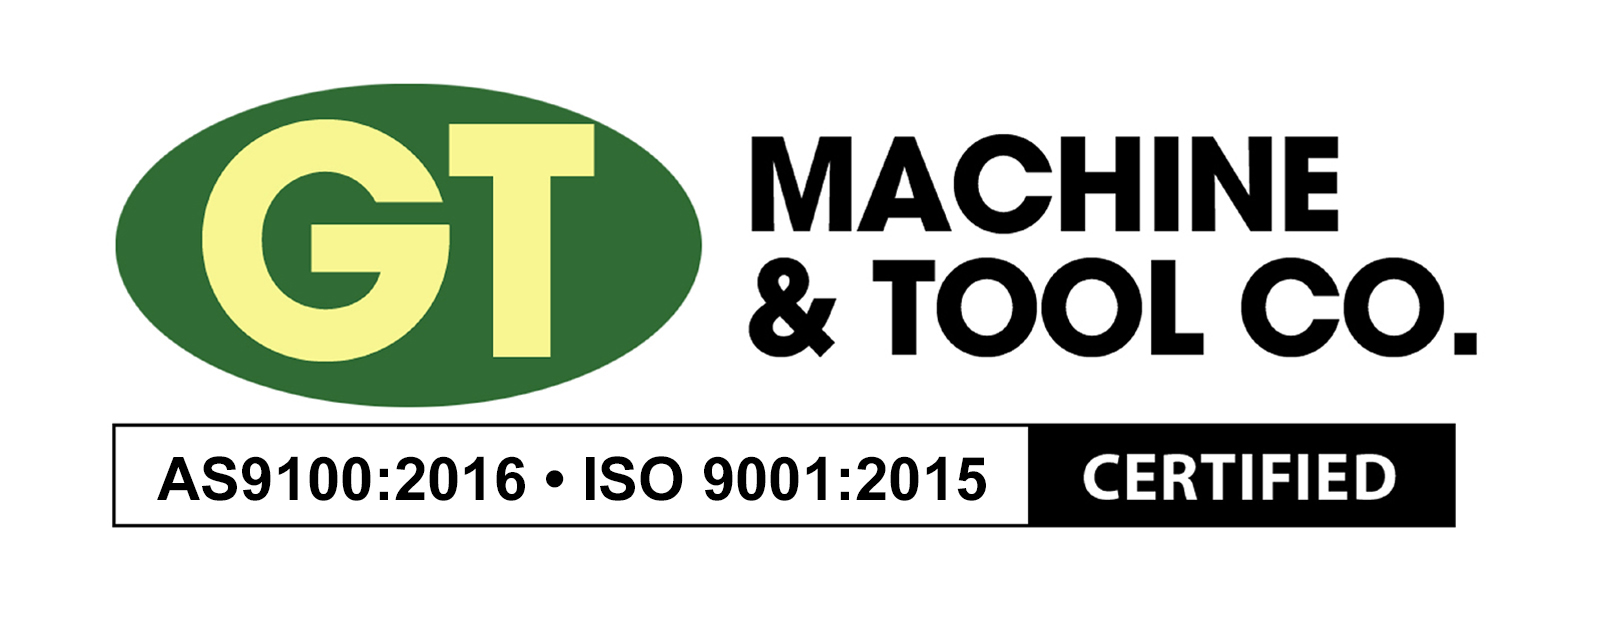 GT Machine & Tool Co.